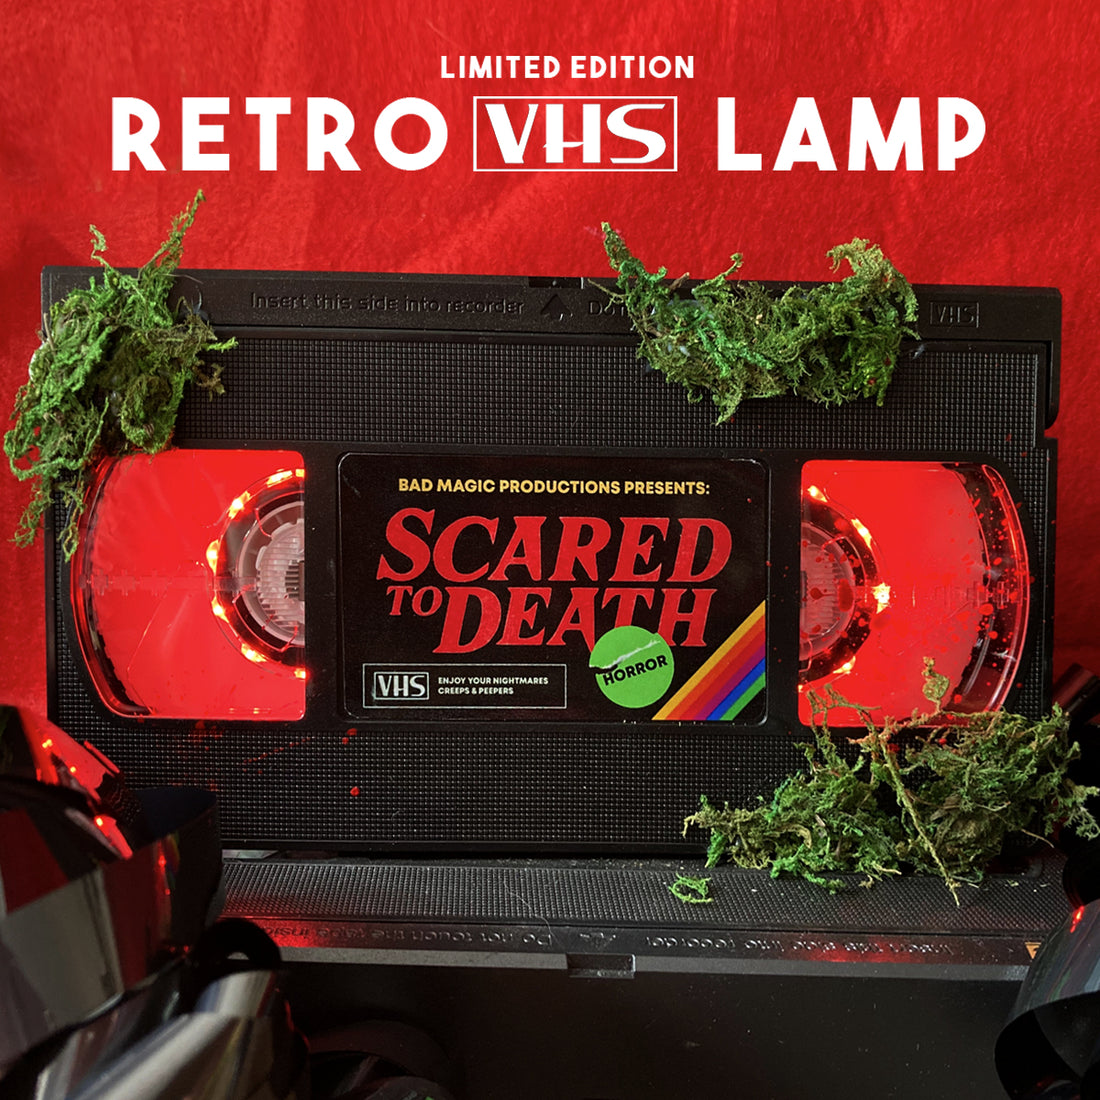 Retro VHS Lamp